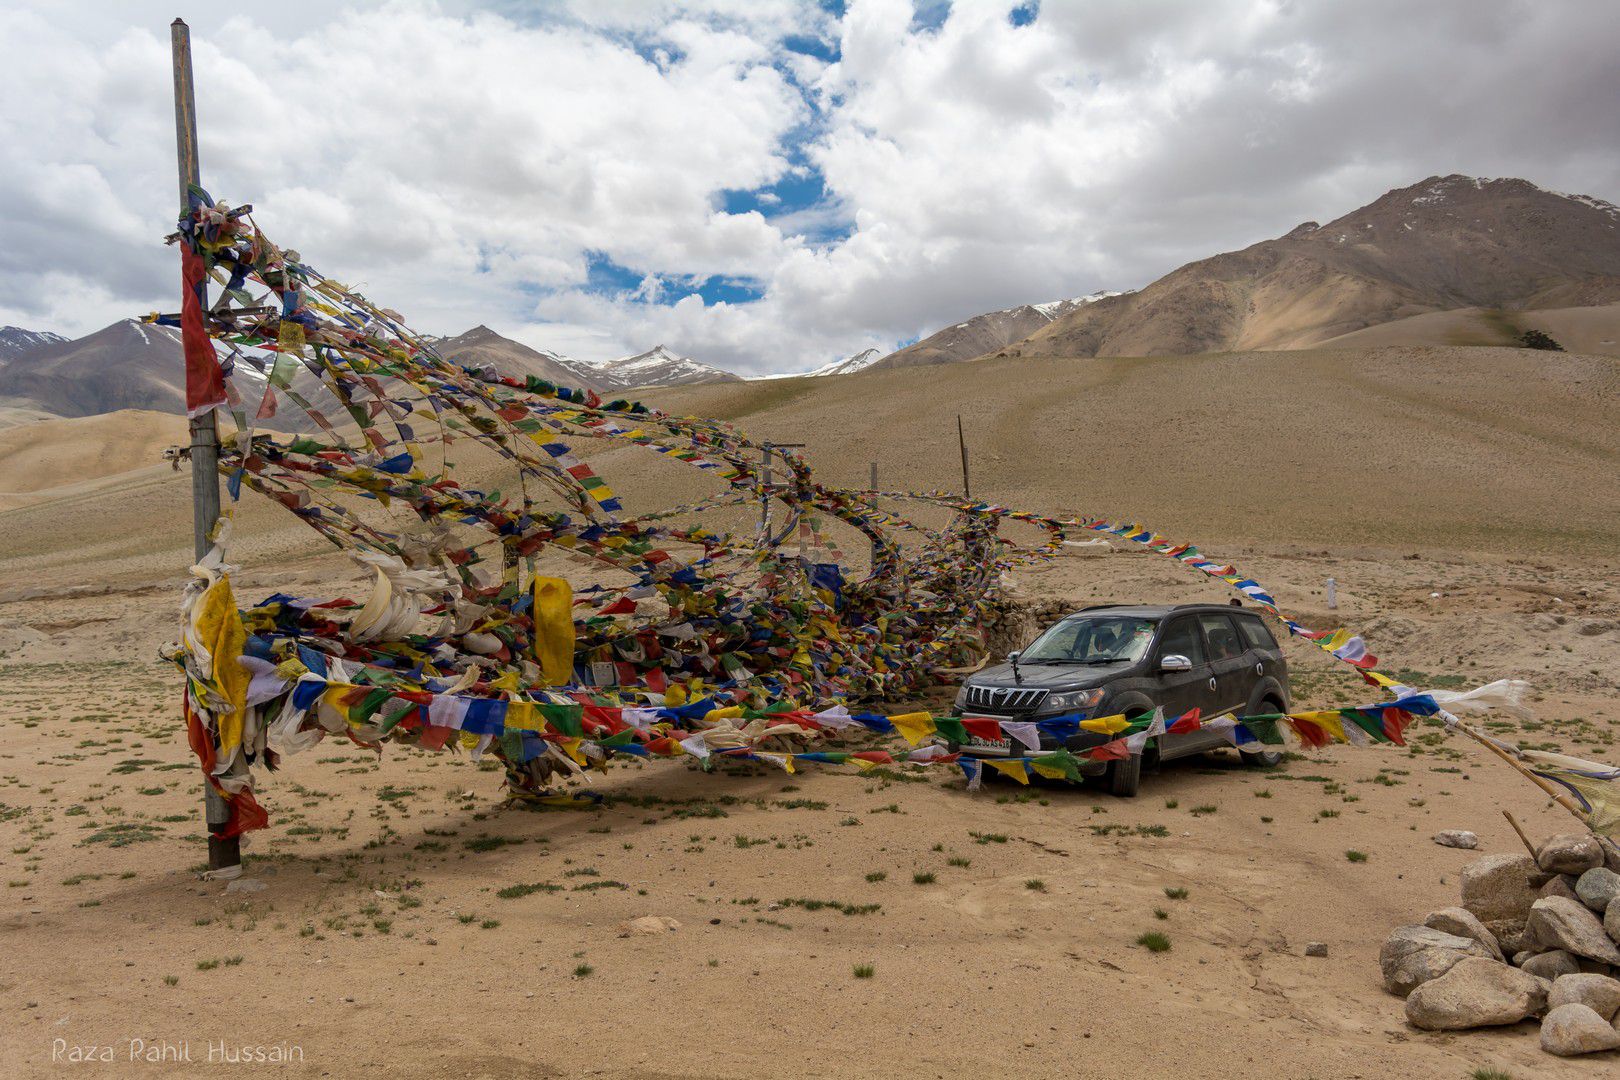 Trishul, Ladakh